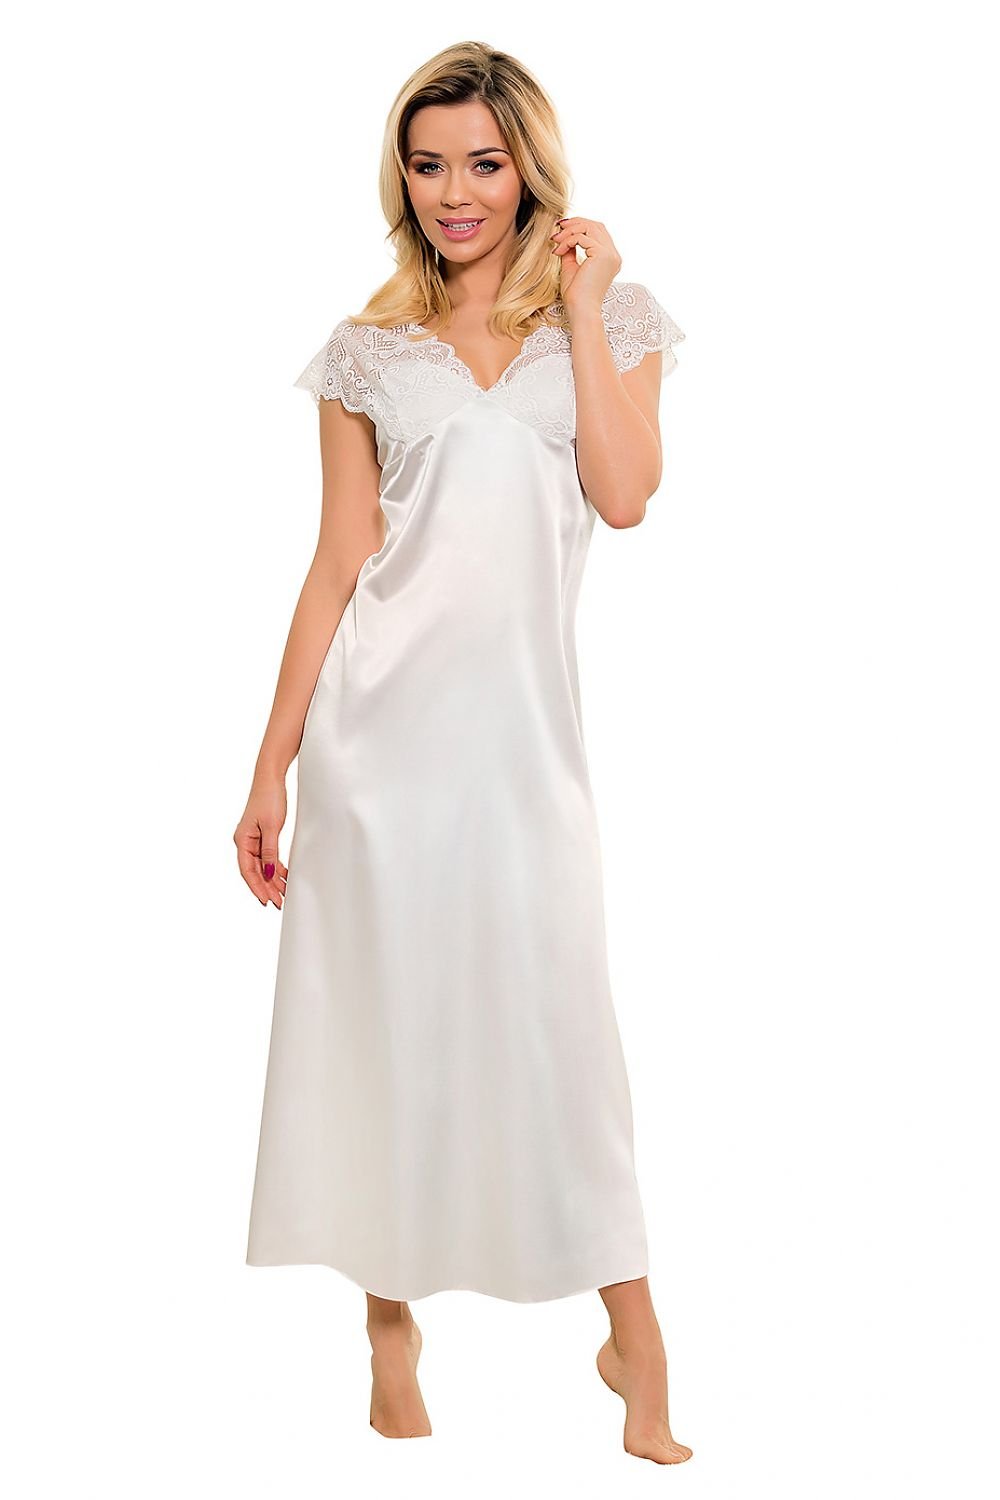 Petticoat model 140233 Kalimo Nightgowns, Nighties, Sleep Shirts